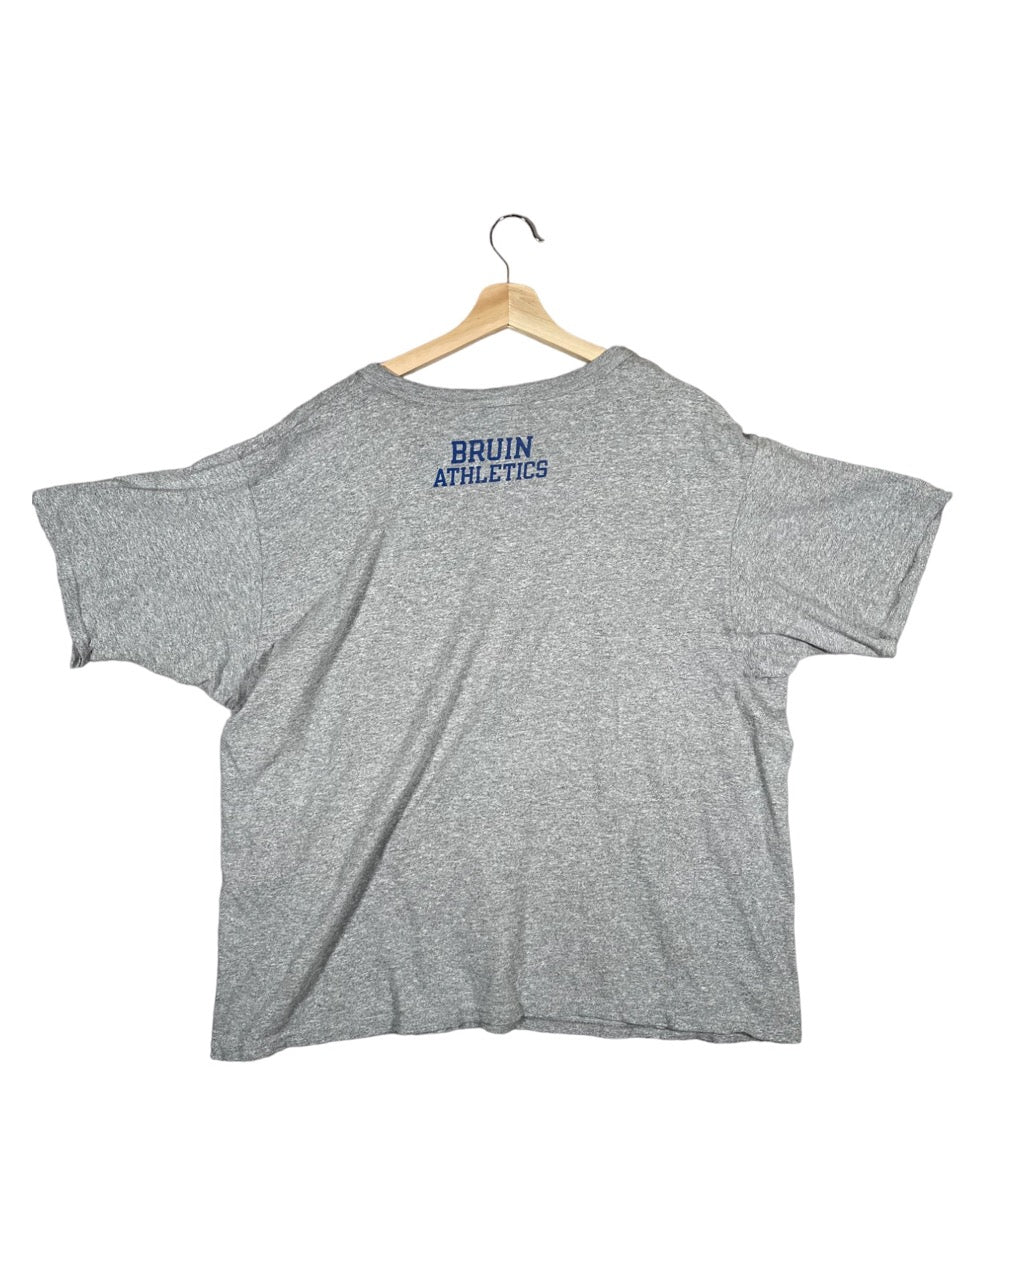 Vintage 1990's UCLA Bruins Football T-Shirt